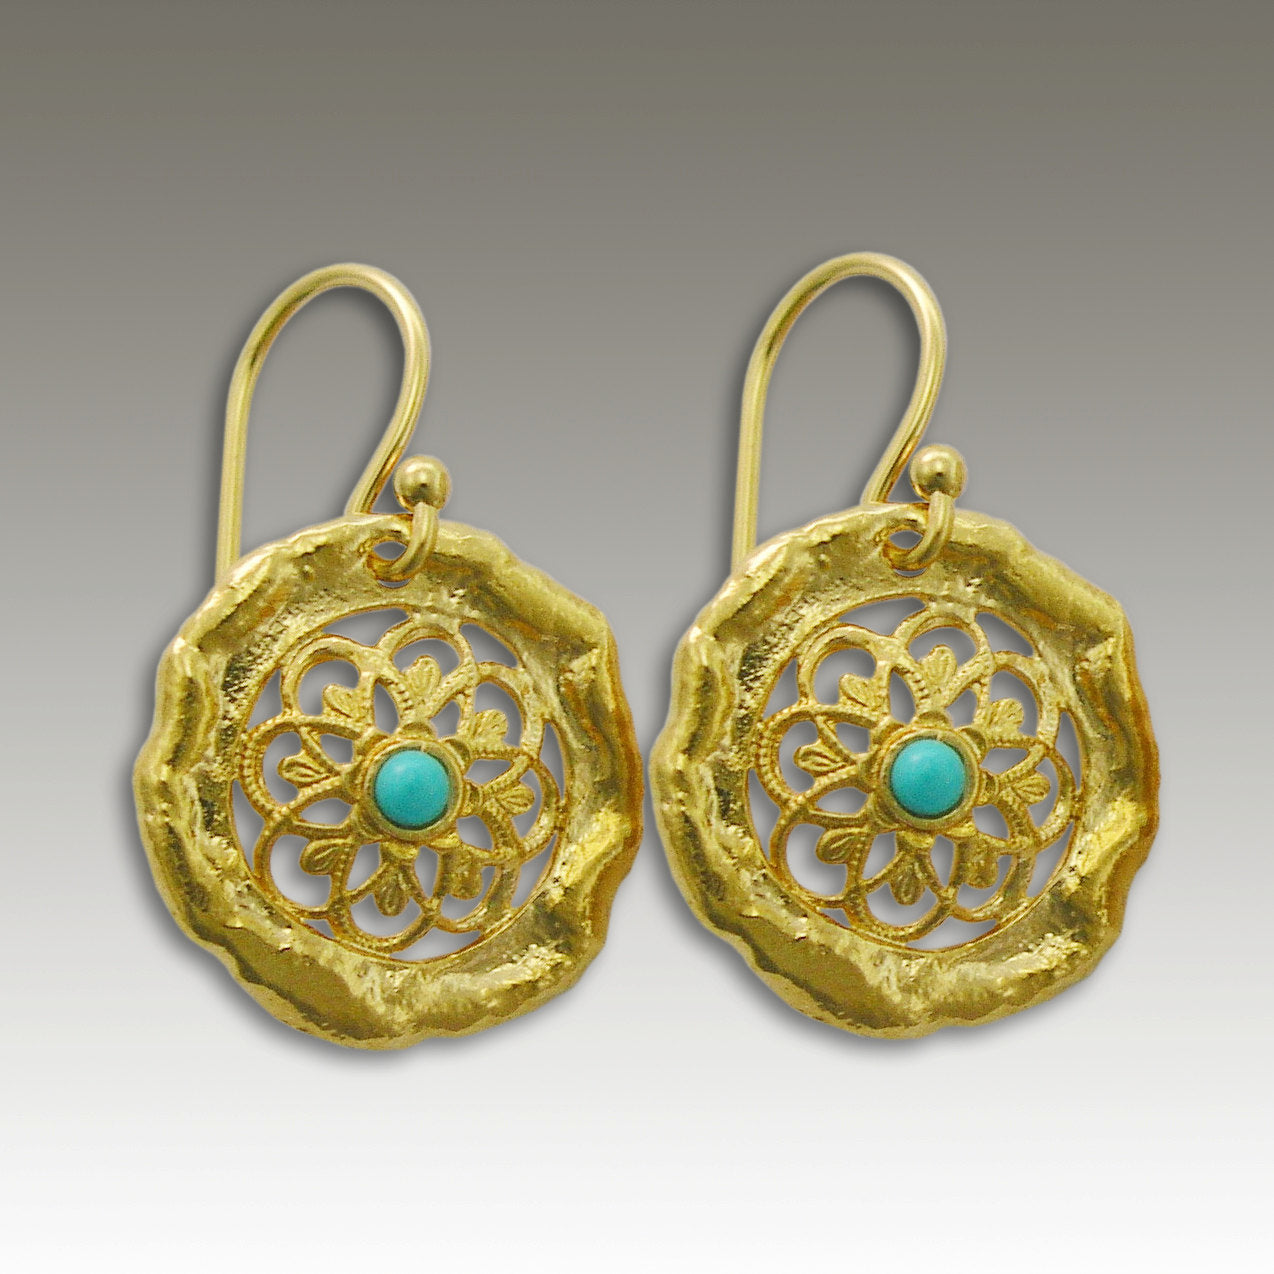 Solid yellow Gold Earrings, turquoise earrings, gemstone earrings, round earrings, floral earrings, wedding earrings - Golden Sun EG2161B